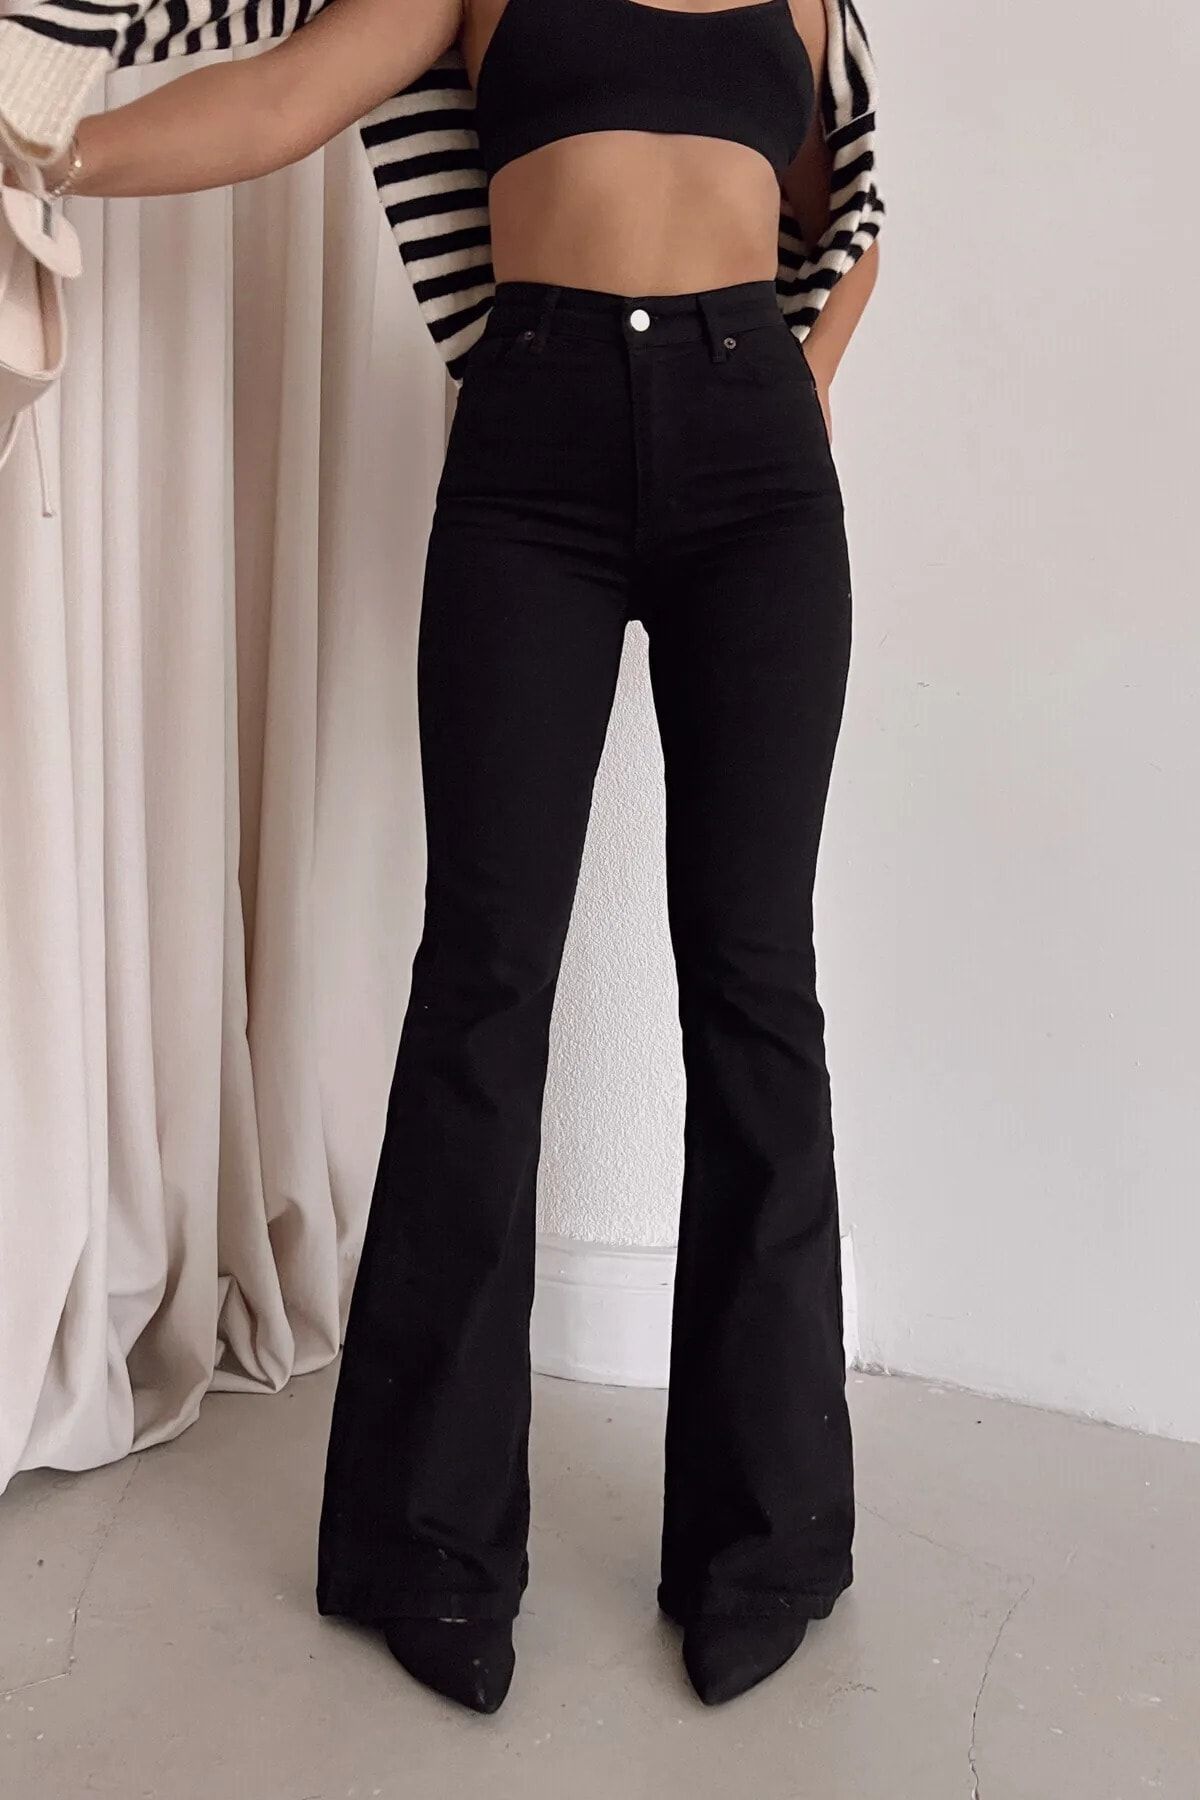 MAKRAS EXCLUSIVE Penelope Yüksek Bel Ispanyol Paça Siyah Flare Jeans Kot Pantolon